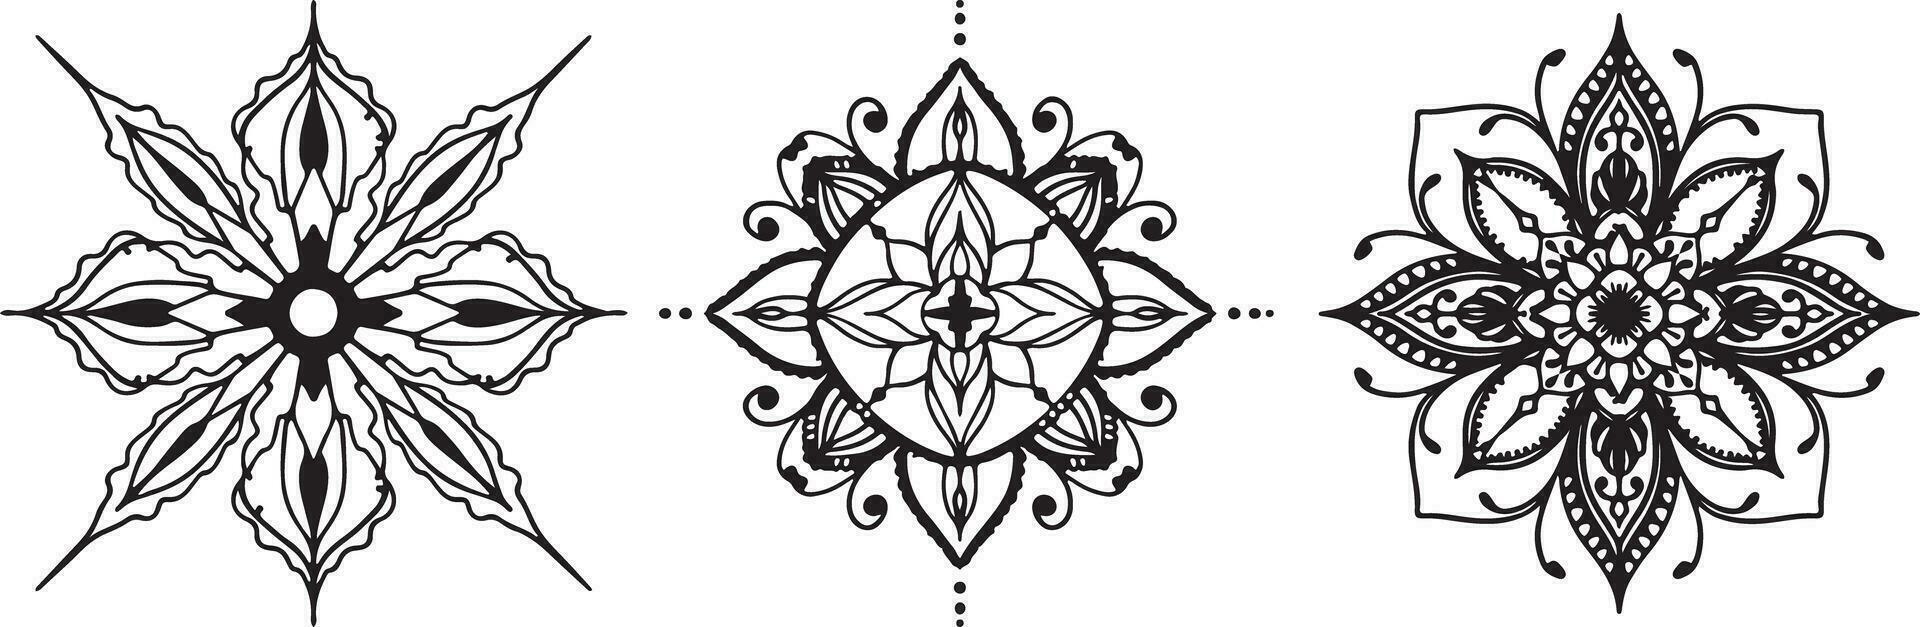 Mandala Vektor Grafik. dekorativ Kreis Ornament im ethnisch orientalisch Stil. Vektor abstrakt Mandala Muster. Yoga Logos. dekorativ runden Ornamente.